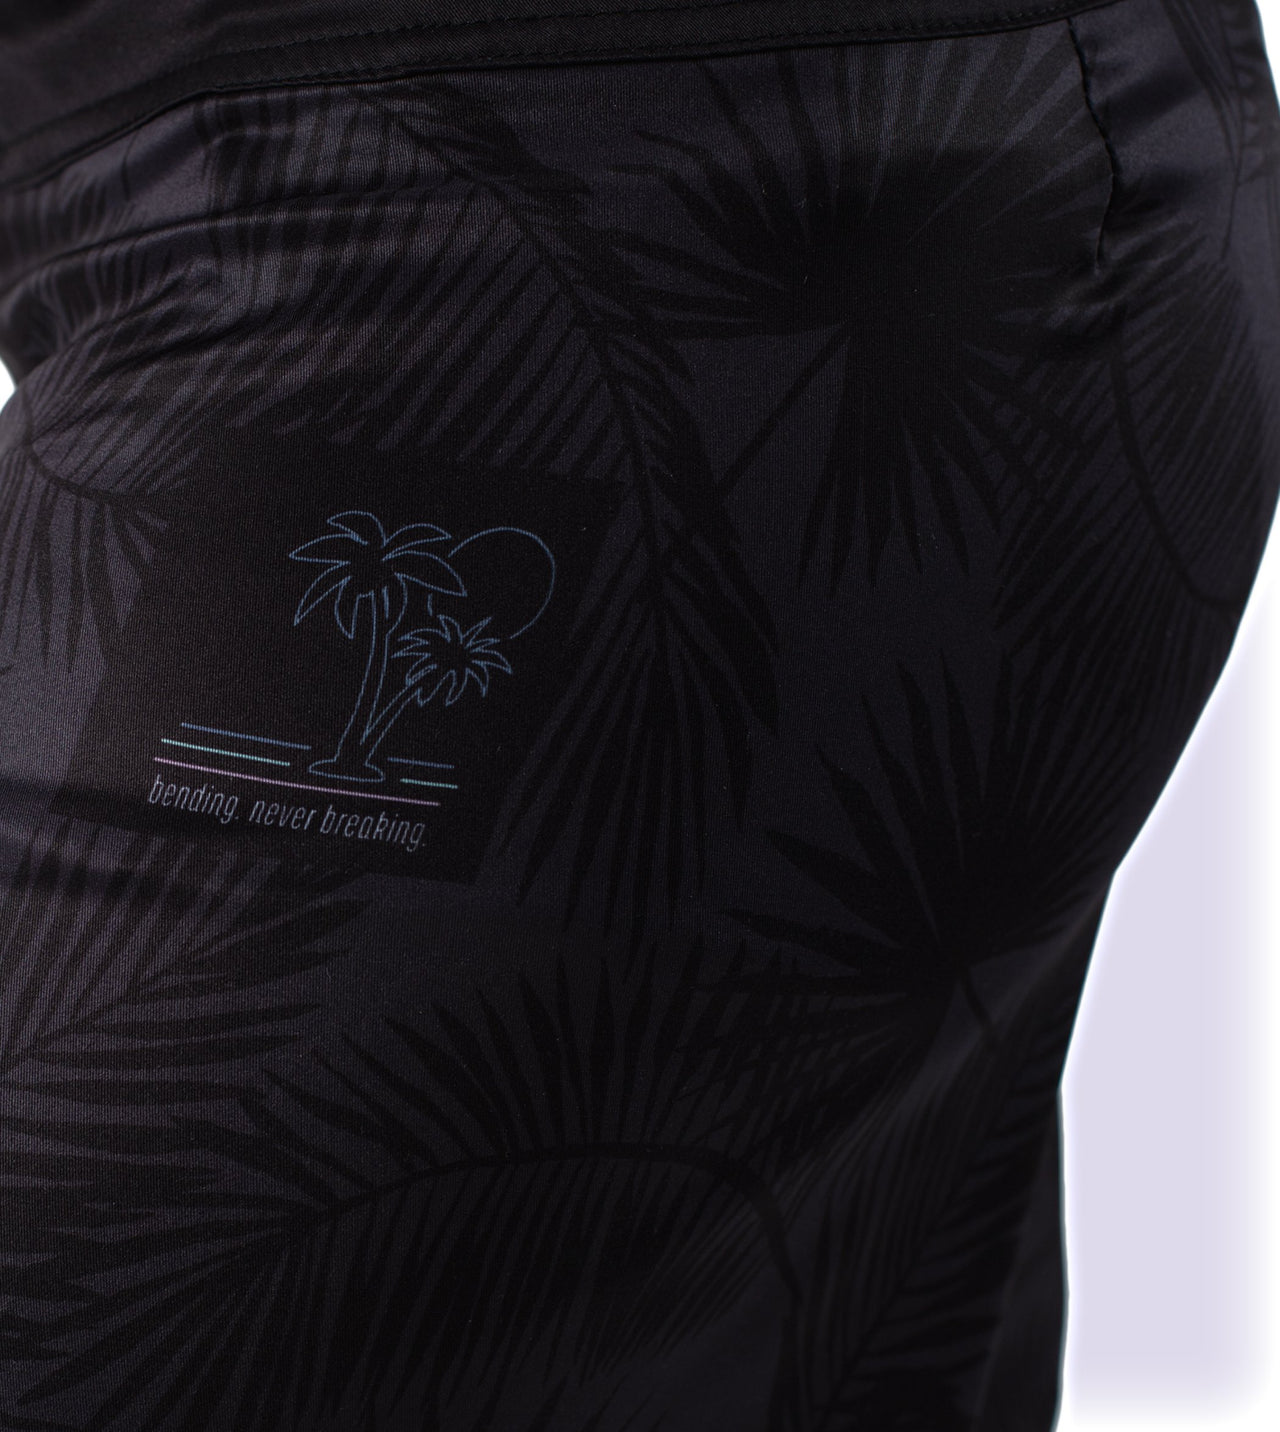 93brand "Palm" Shorts (Regular Length)